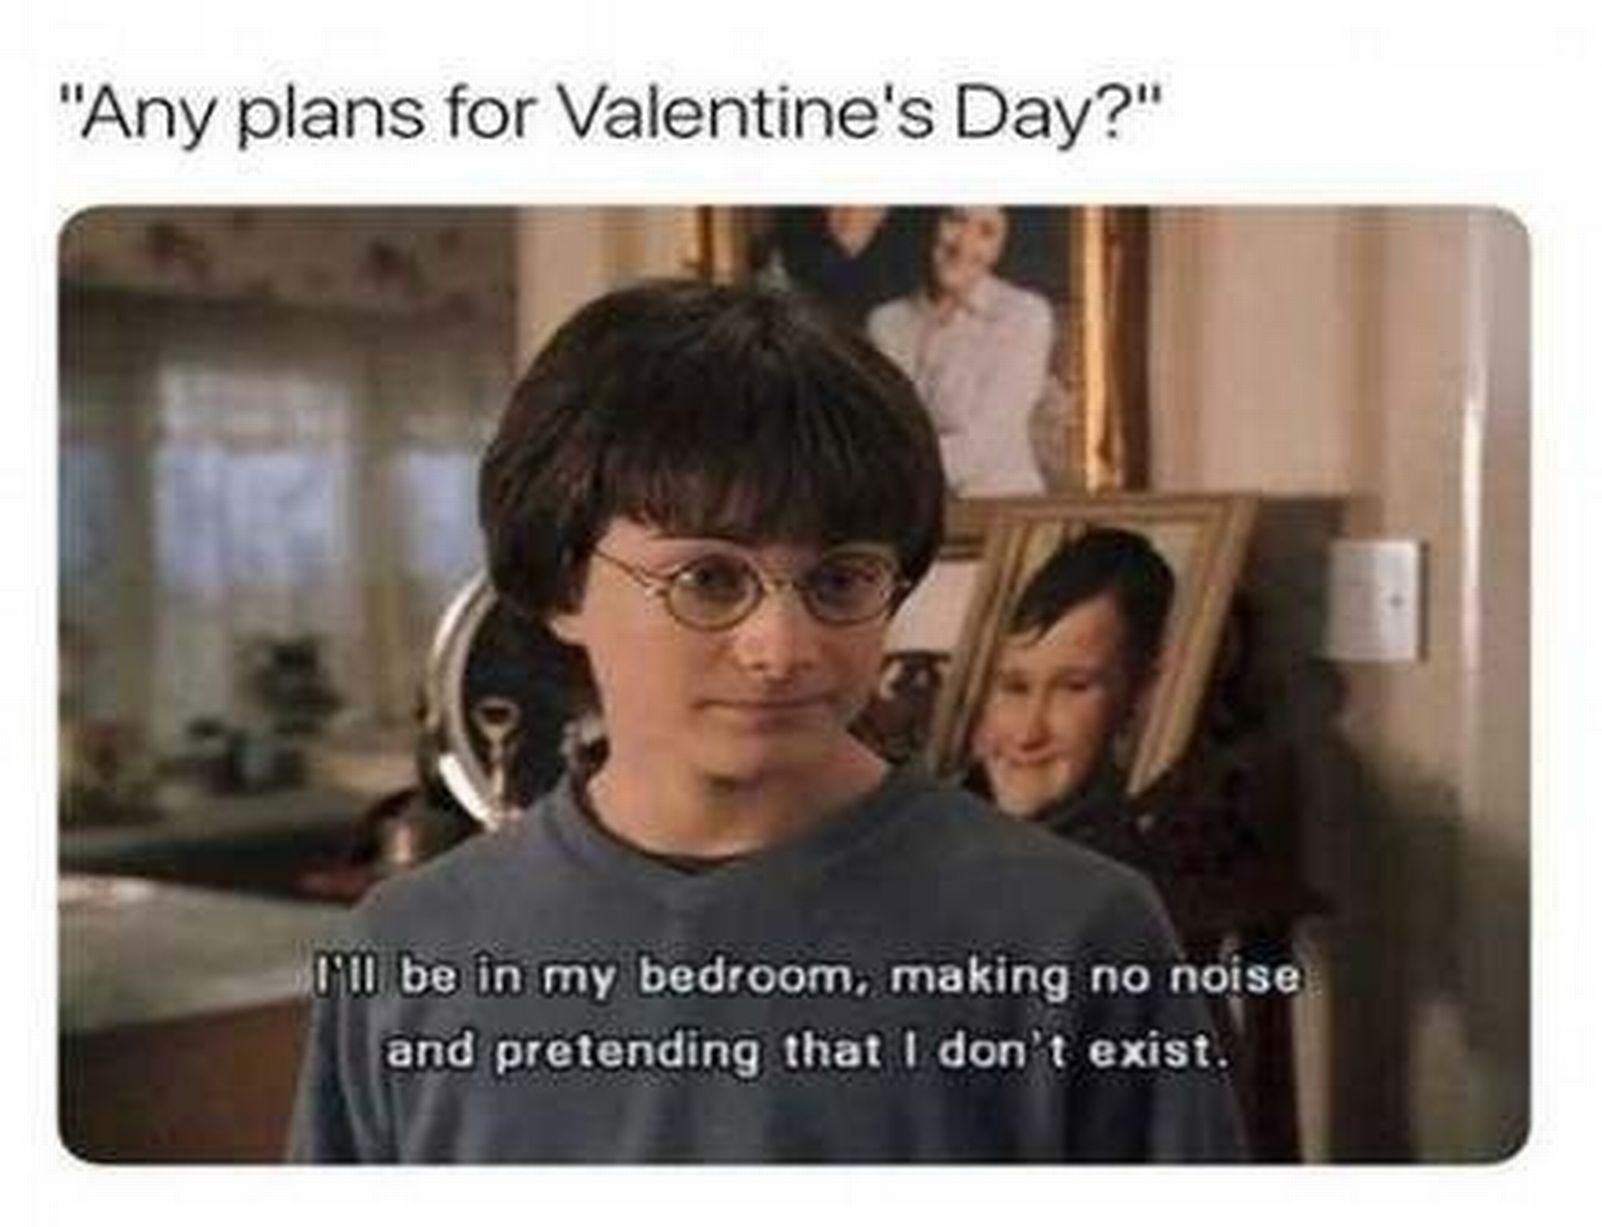 valentine's day memes for singles